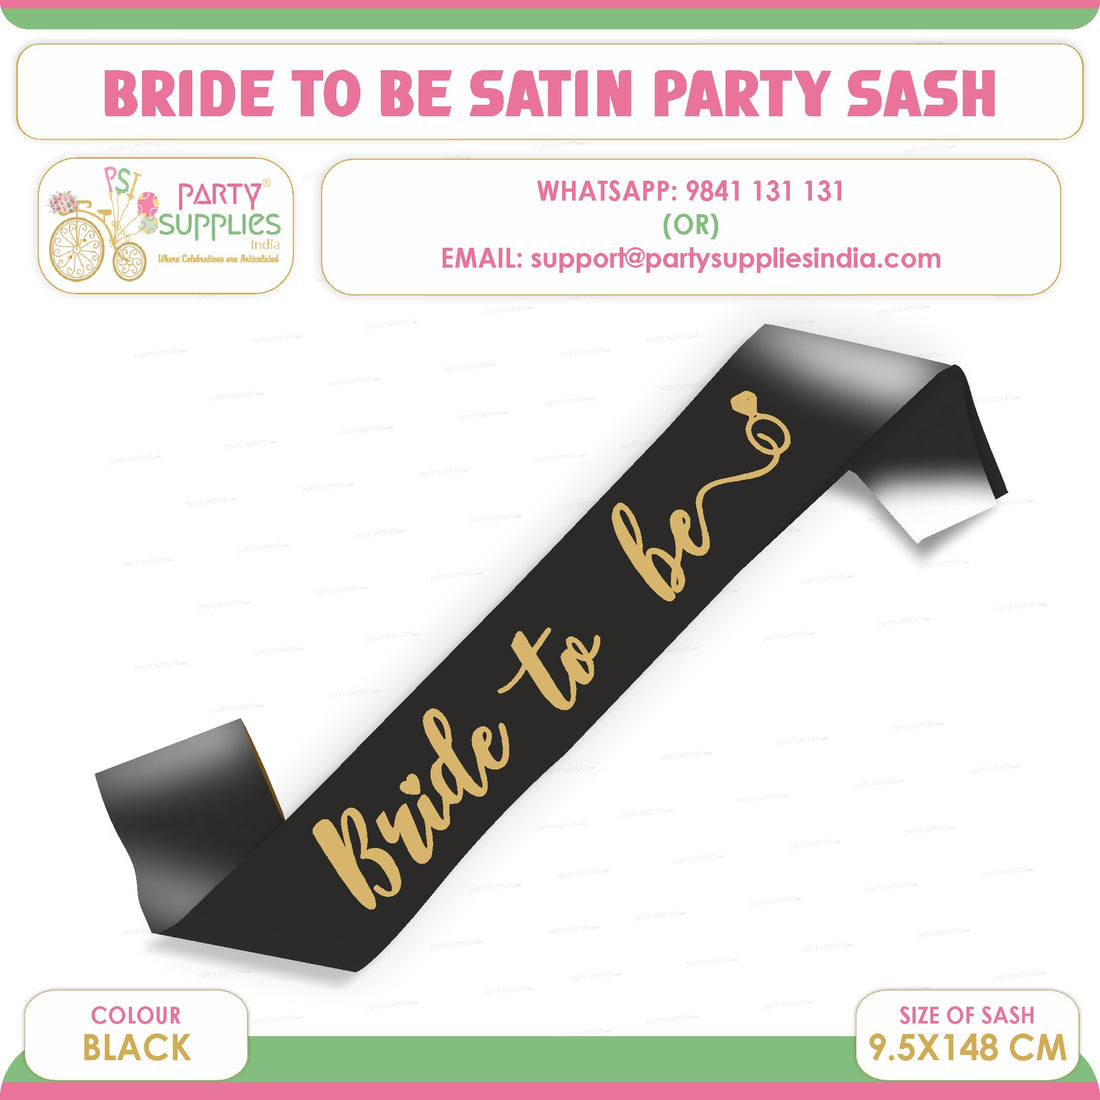 PSI Bride to Be Black Satin Party Sash